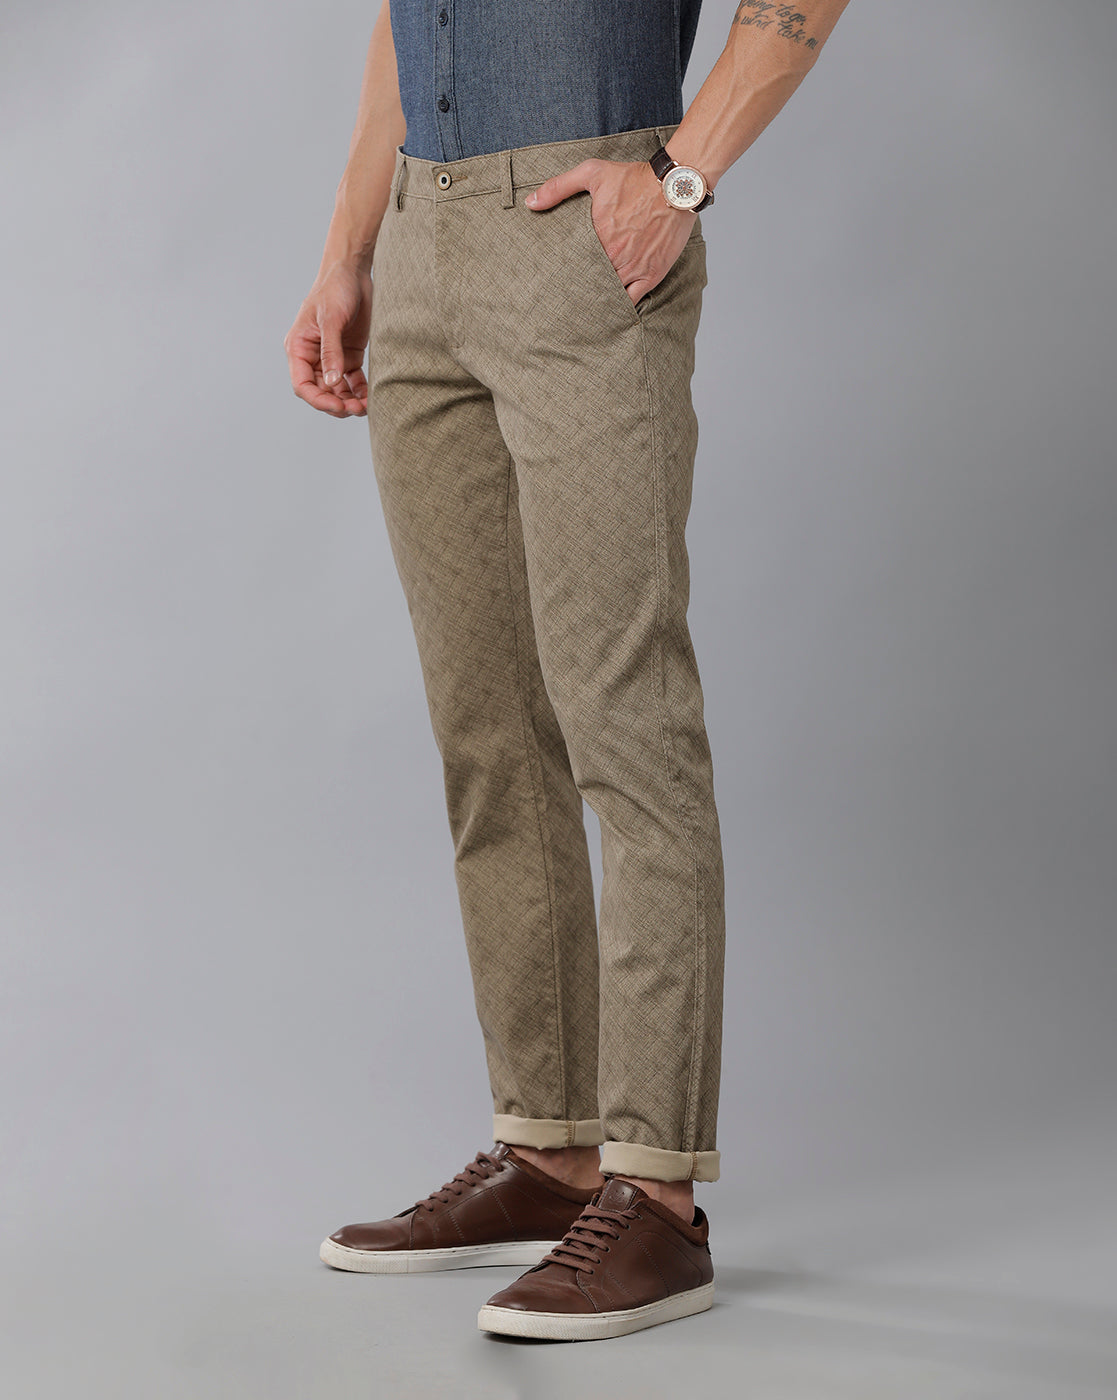 Classic Polo Men's 100% Cotton Moderate Fit Textured Khaki Color Trouser | TO1-35 A-KHA